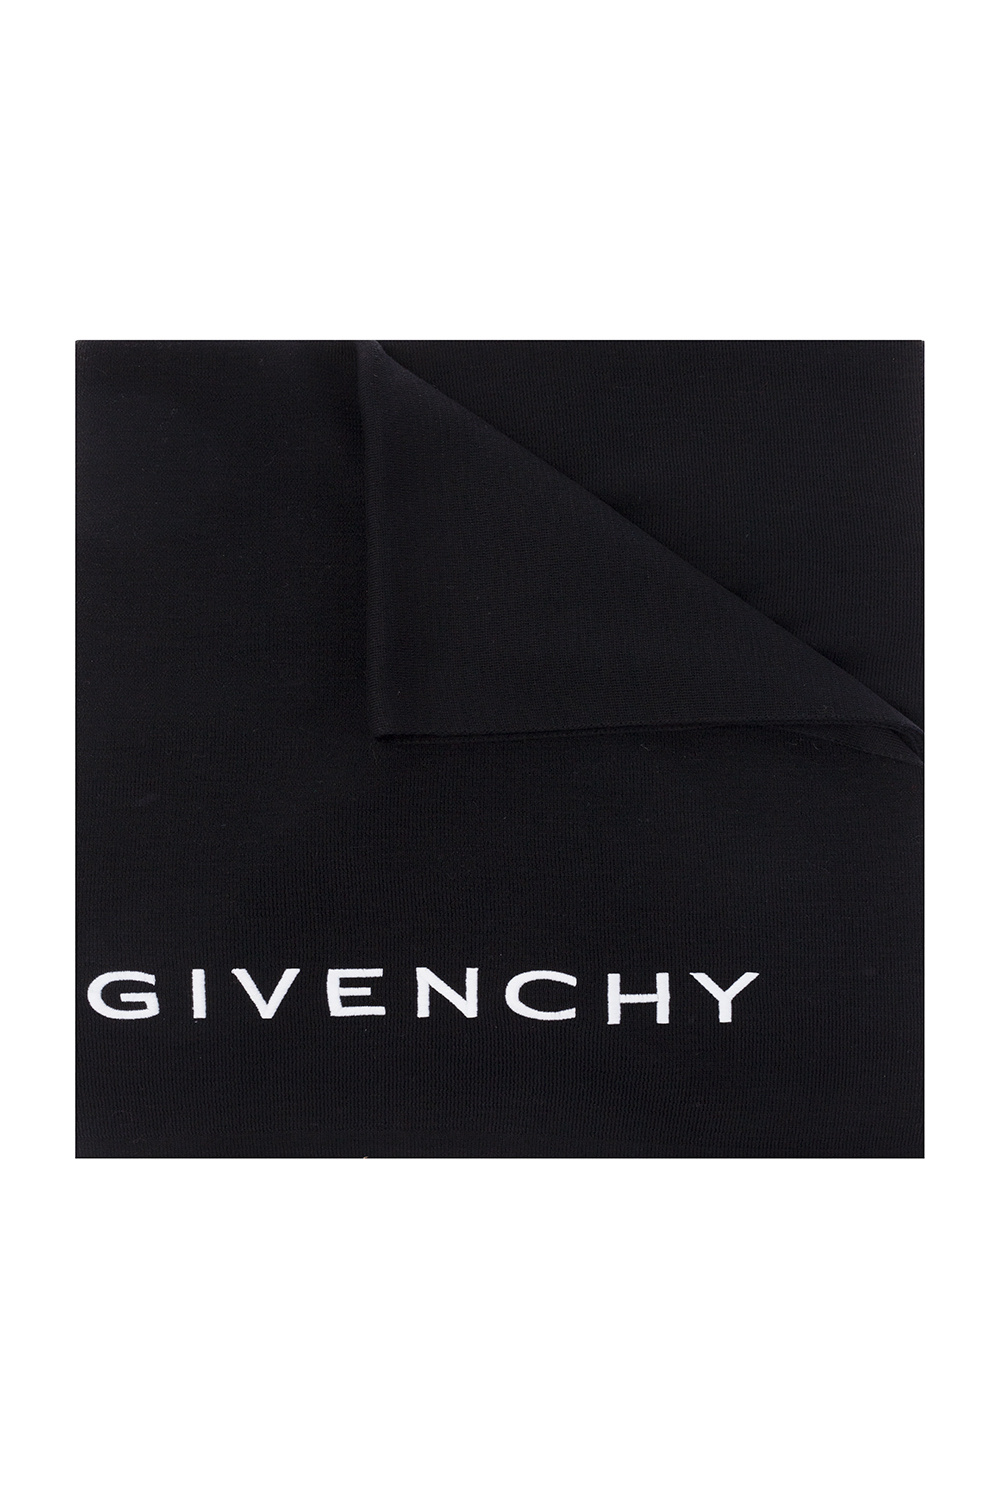 Givenchy Givenchy GIV1 Sock Sneaker